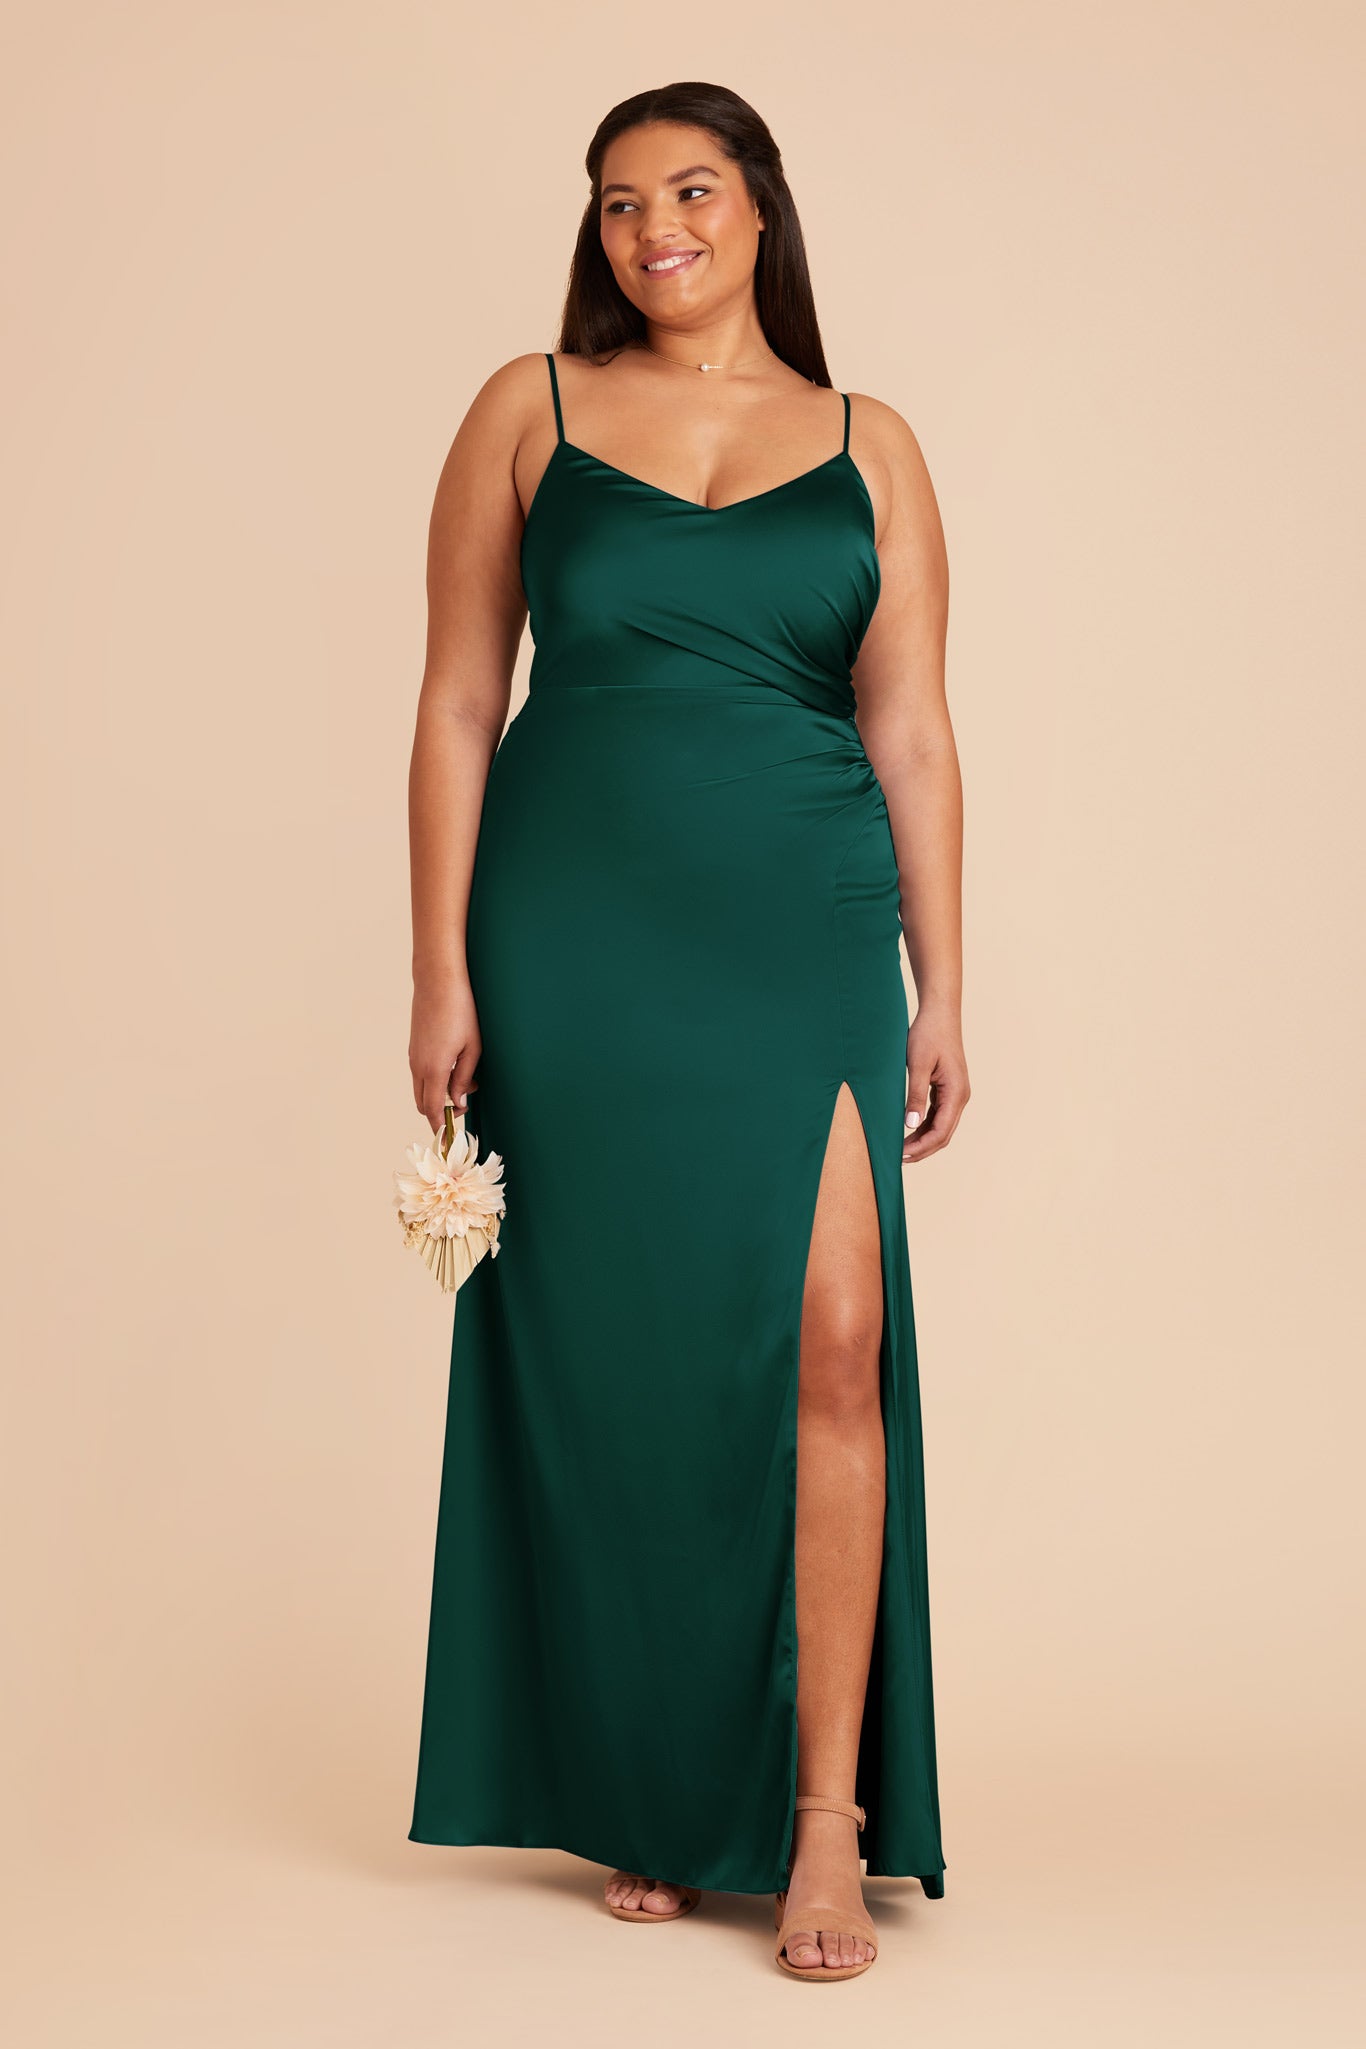 Emerald Catherine Matte Satin Dress by Birdy Grey